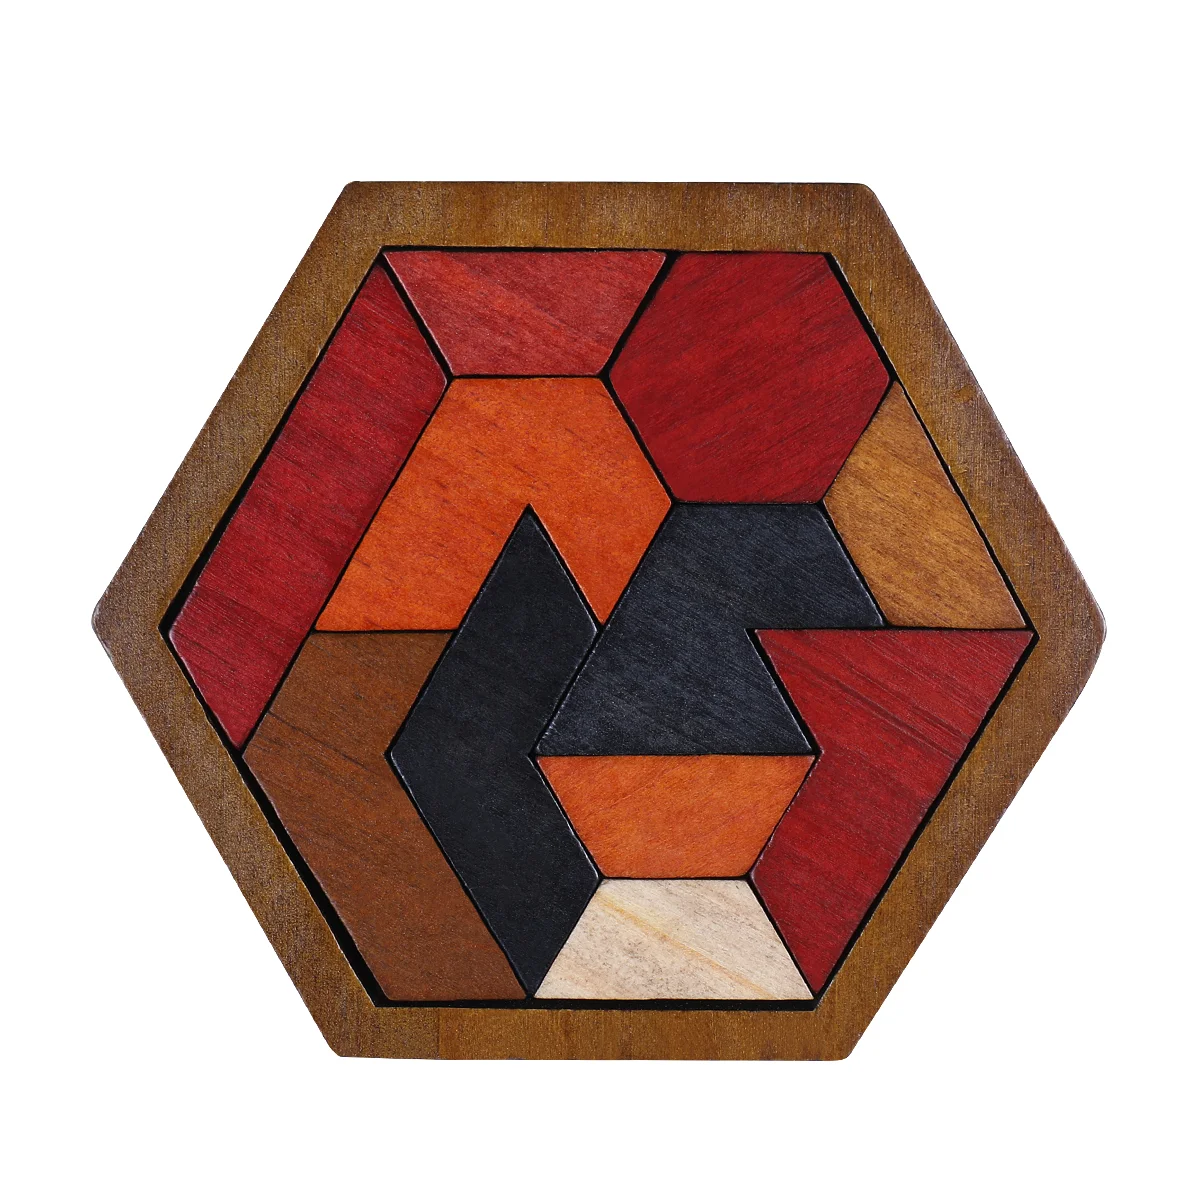 

NUOLUX 12 pcs Hexagon Tangram Jigsaw Puzzles Wooden Puzzle Games Brain Puzzles for Kids